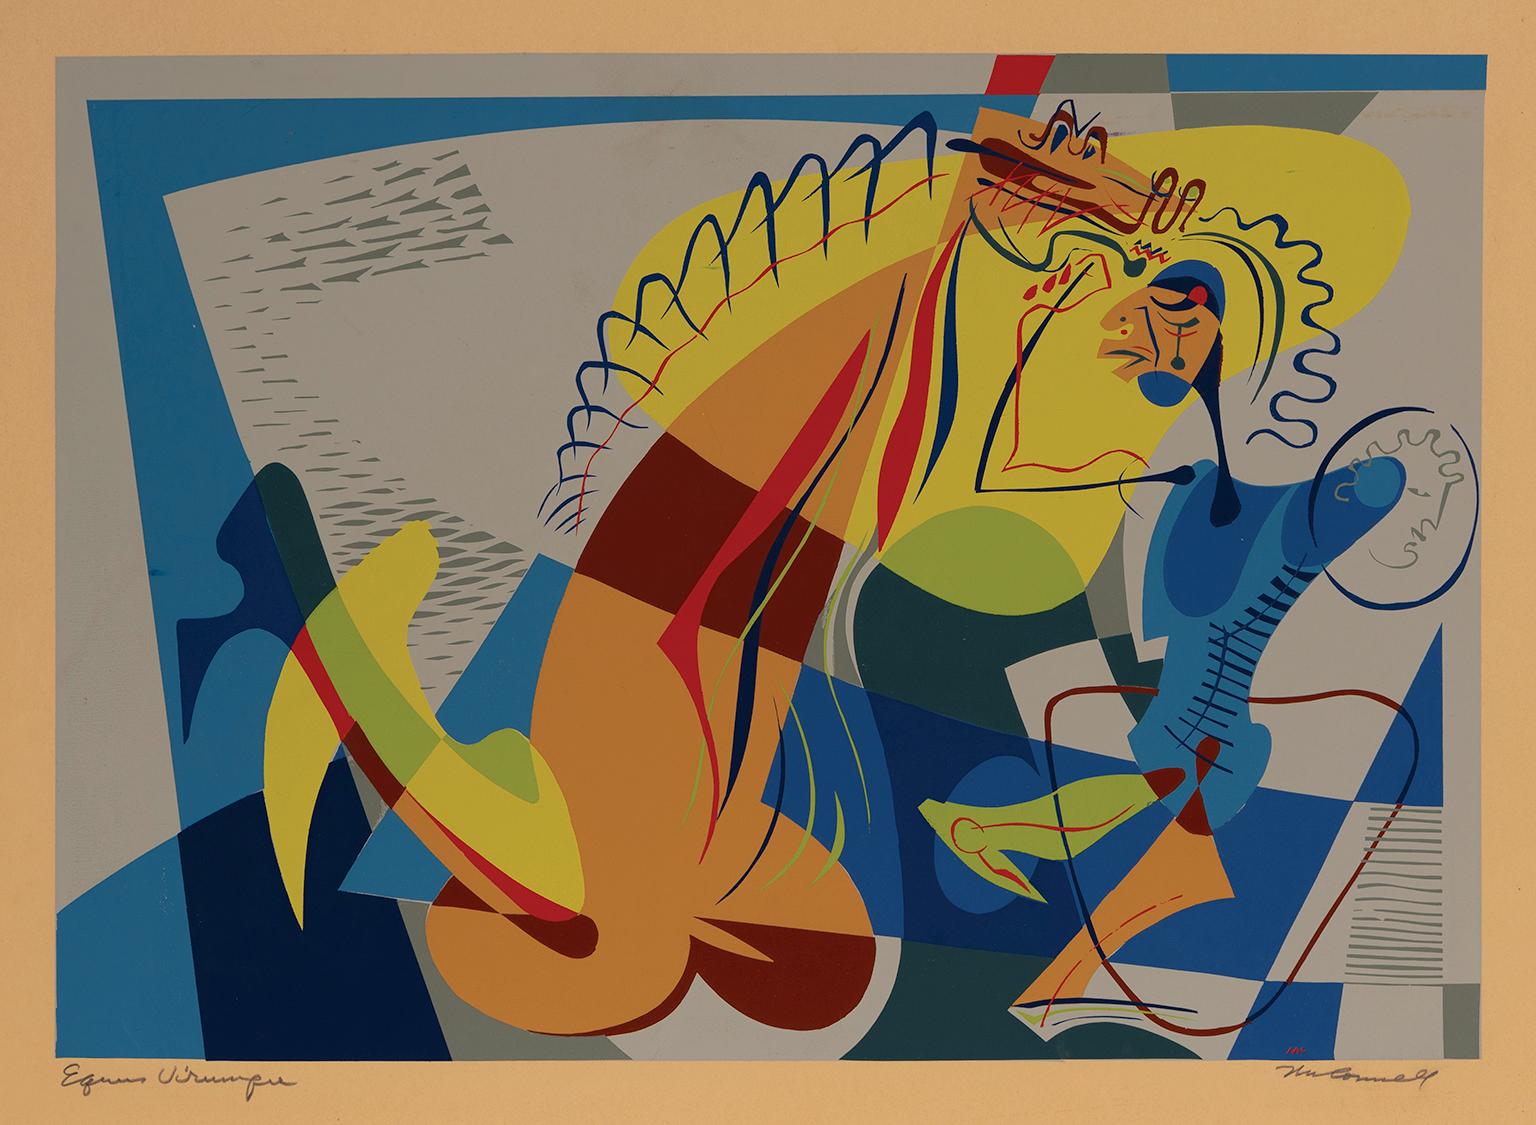 James Houston McConnell Abstract Print – Equus Uirumpu" - Modernität der Jahrhundertmitte